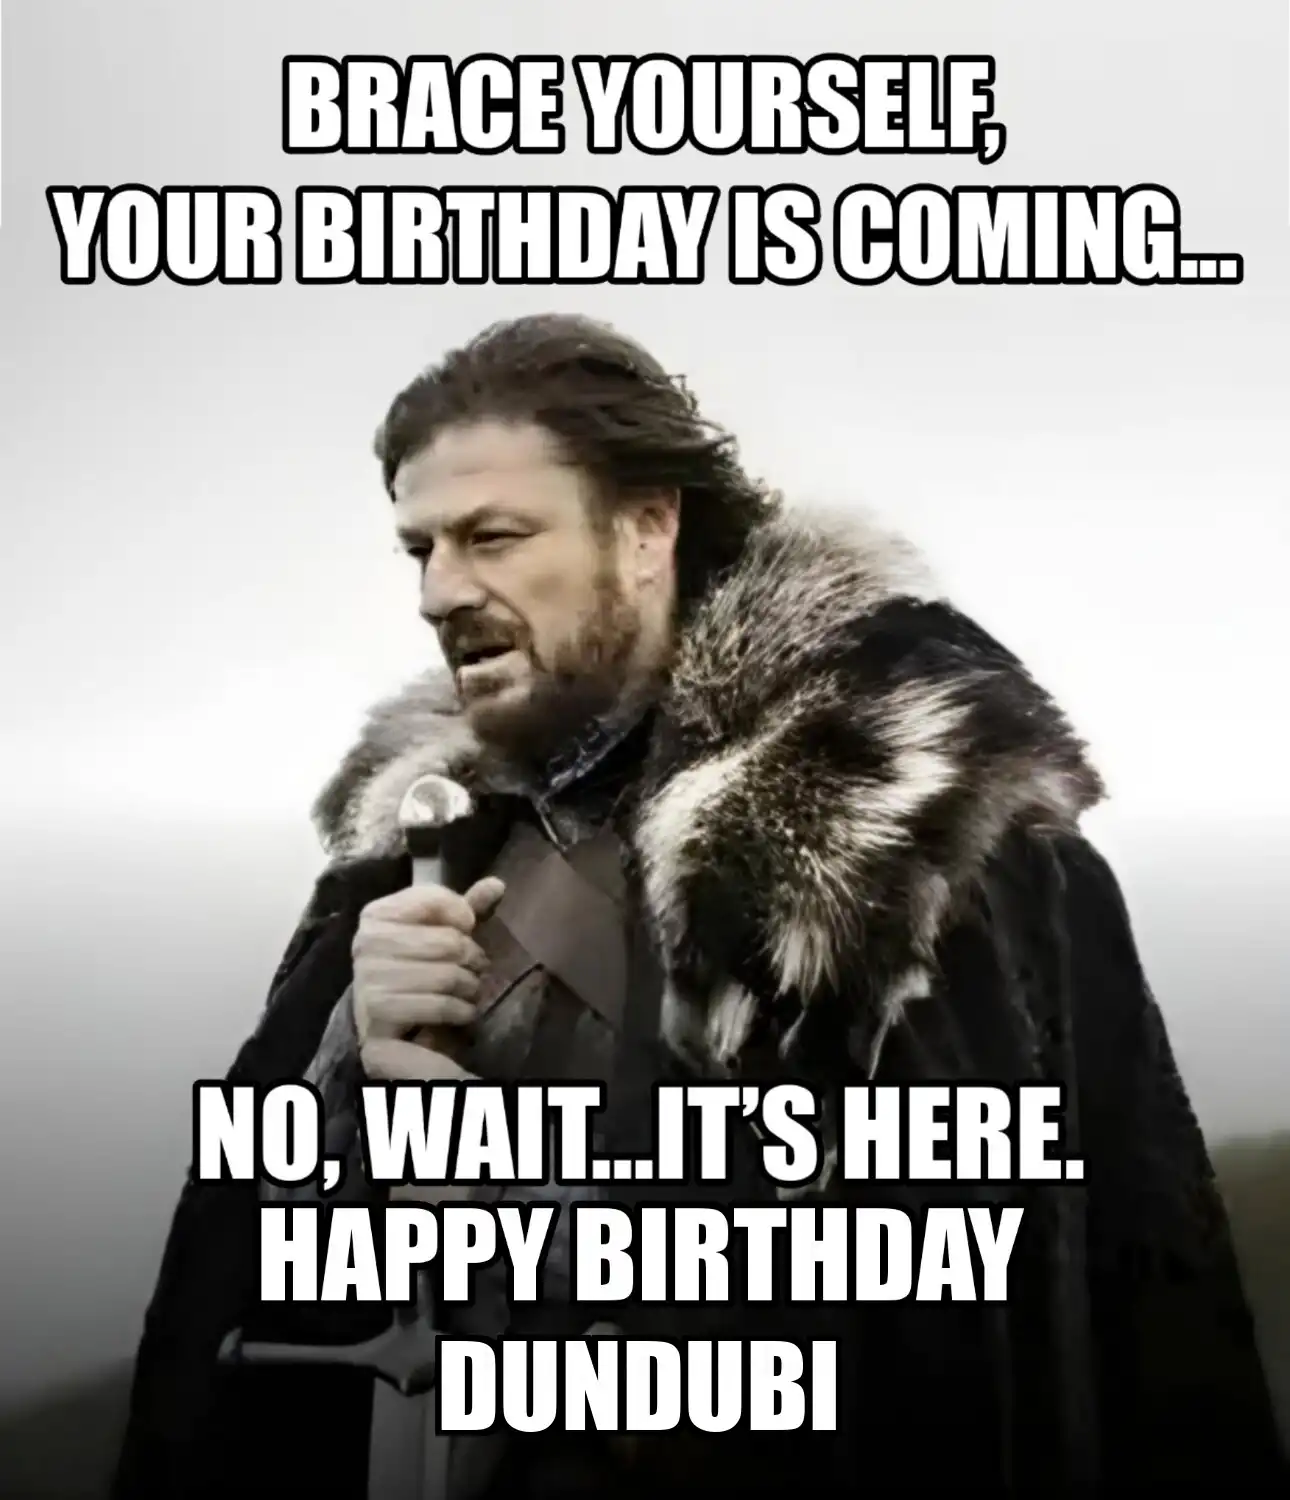 Happy Birthday Dundubi Brace Yourself Your Birthday Is Coming Meme